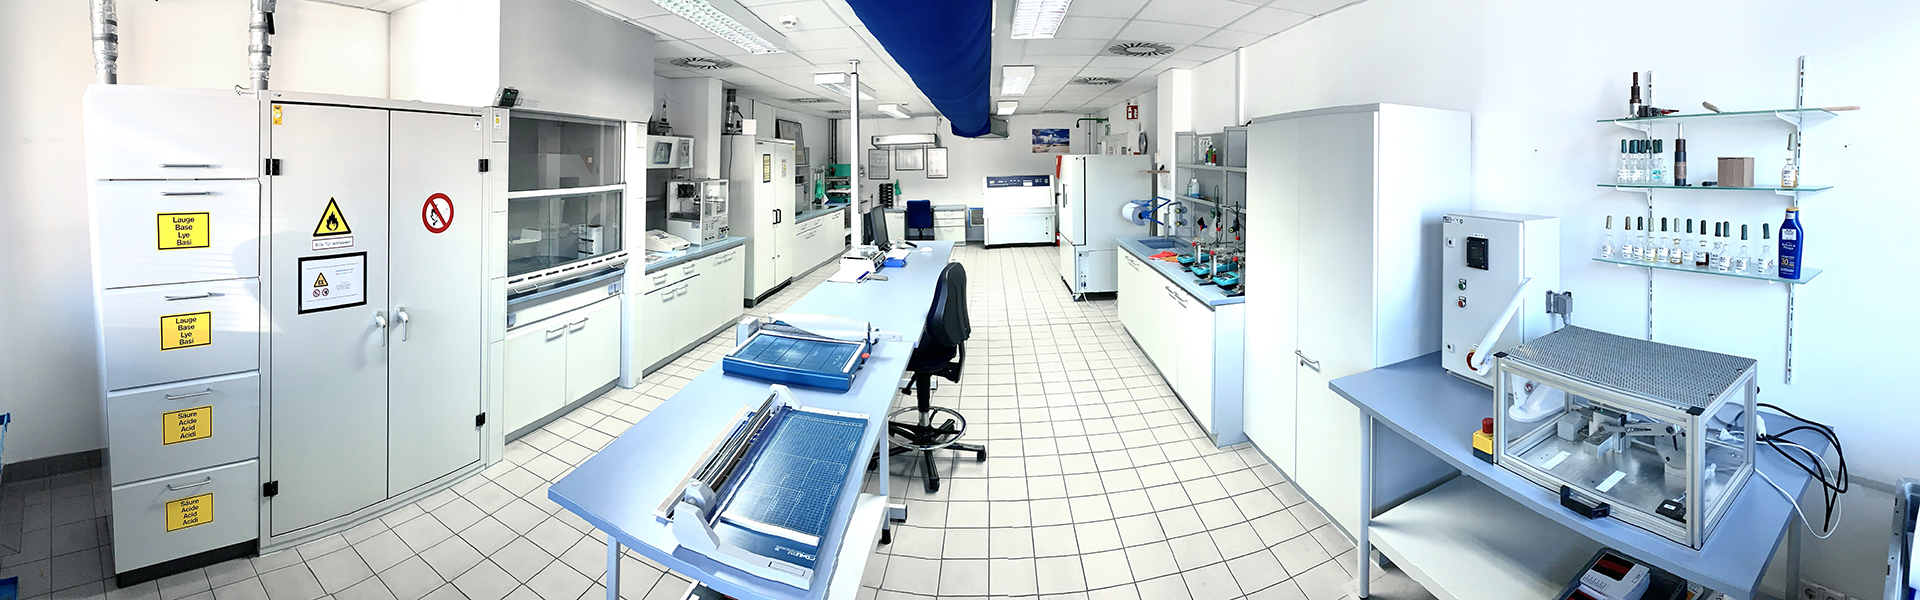 Kroschke Labor Überblick